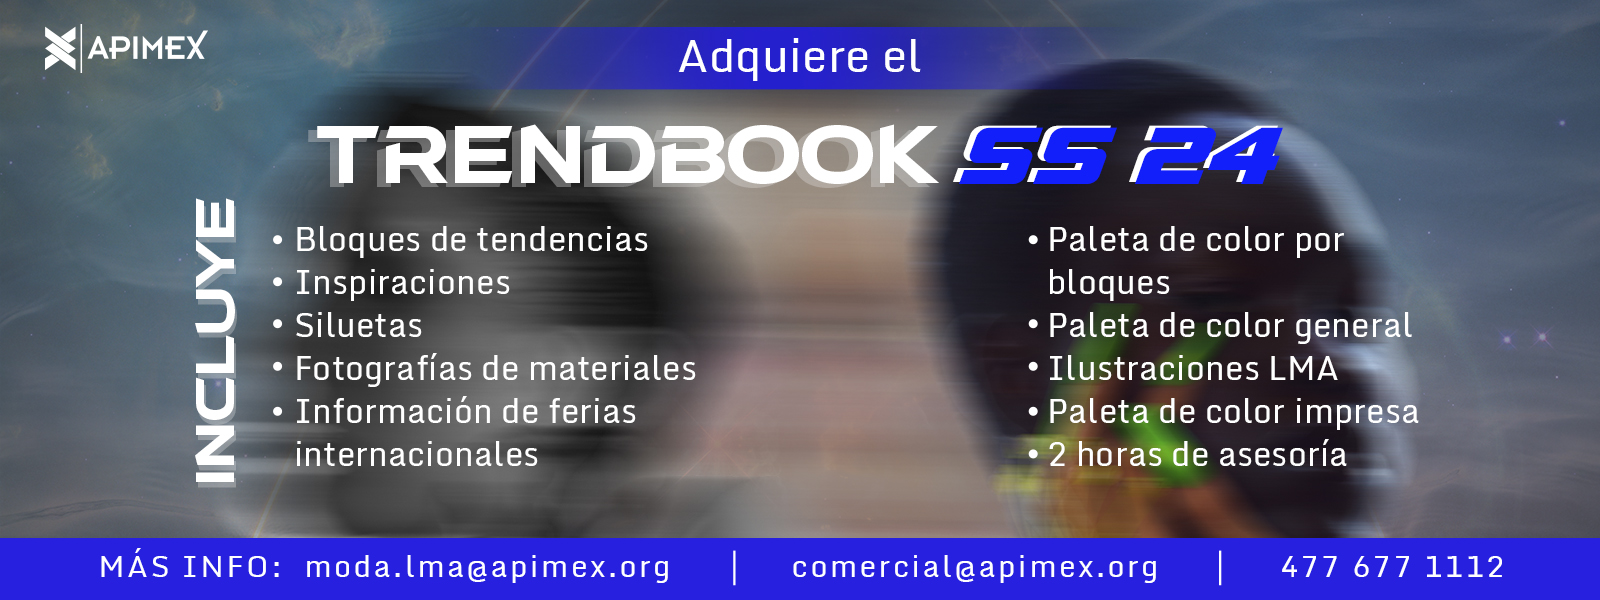 Trendbook APIMEX